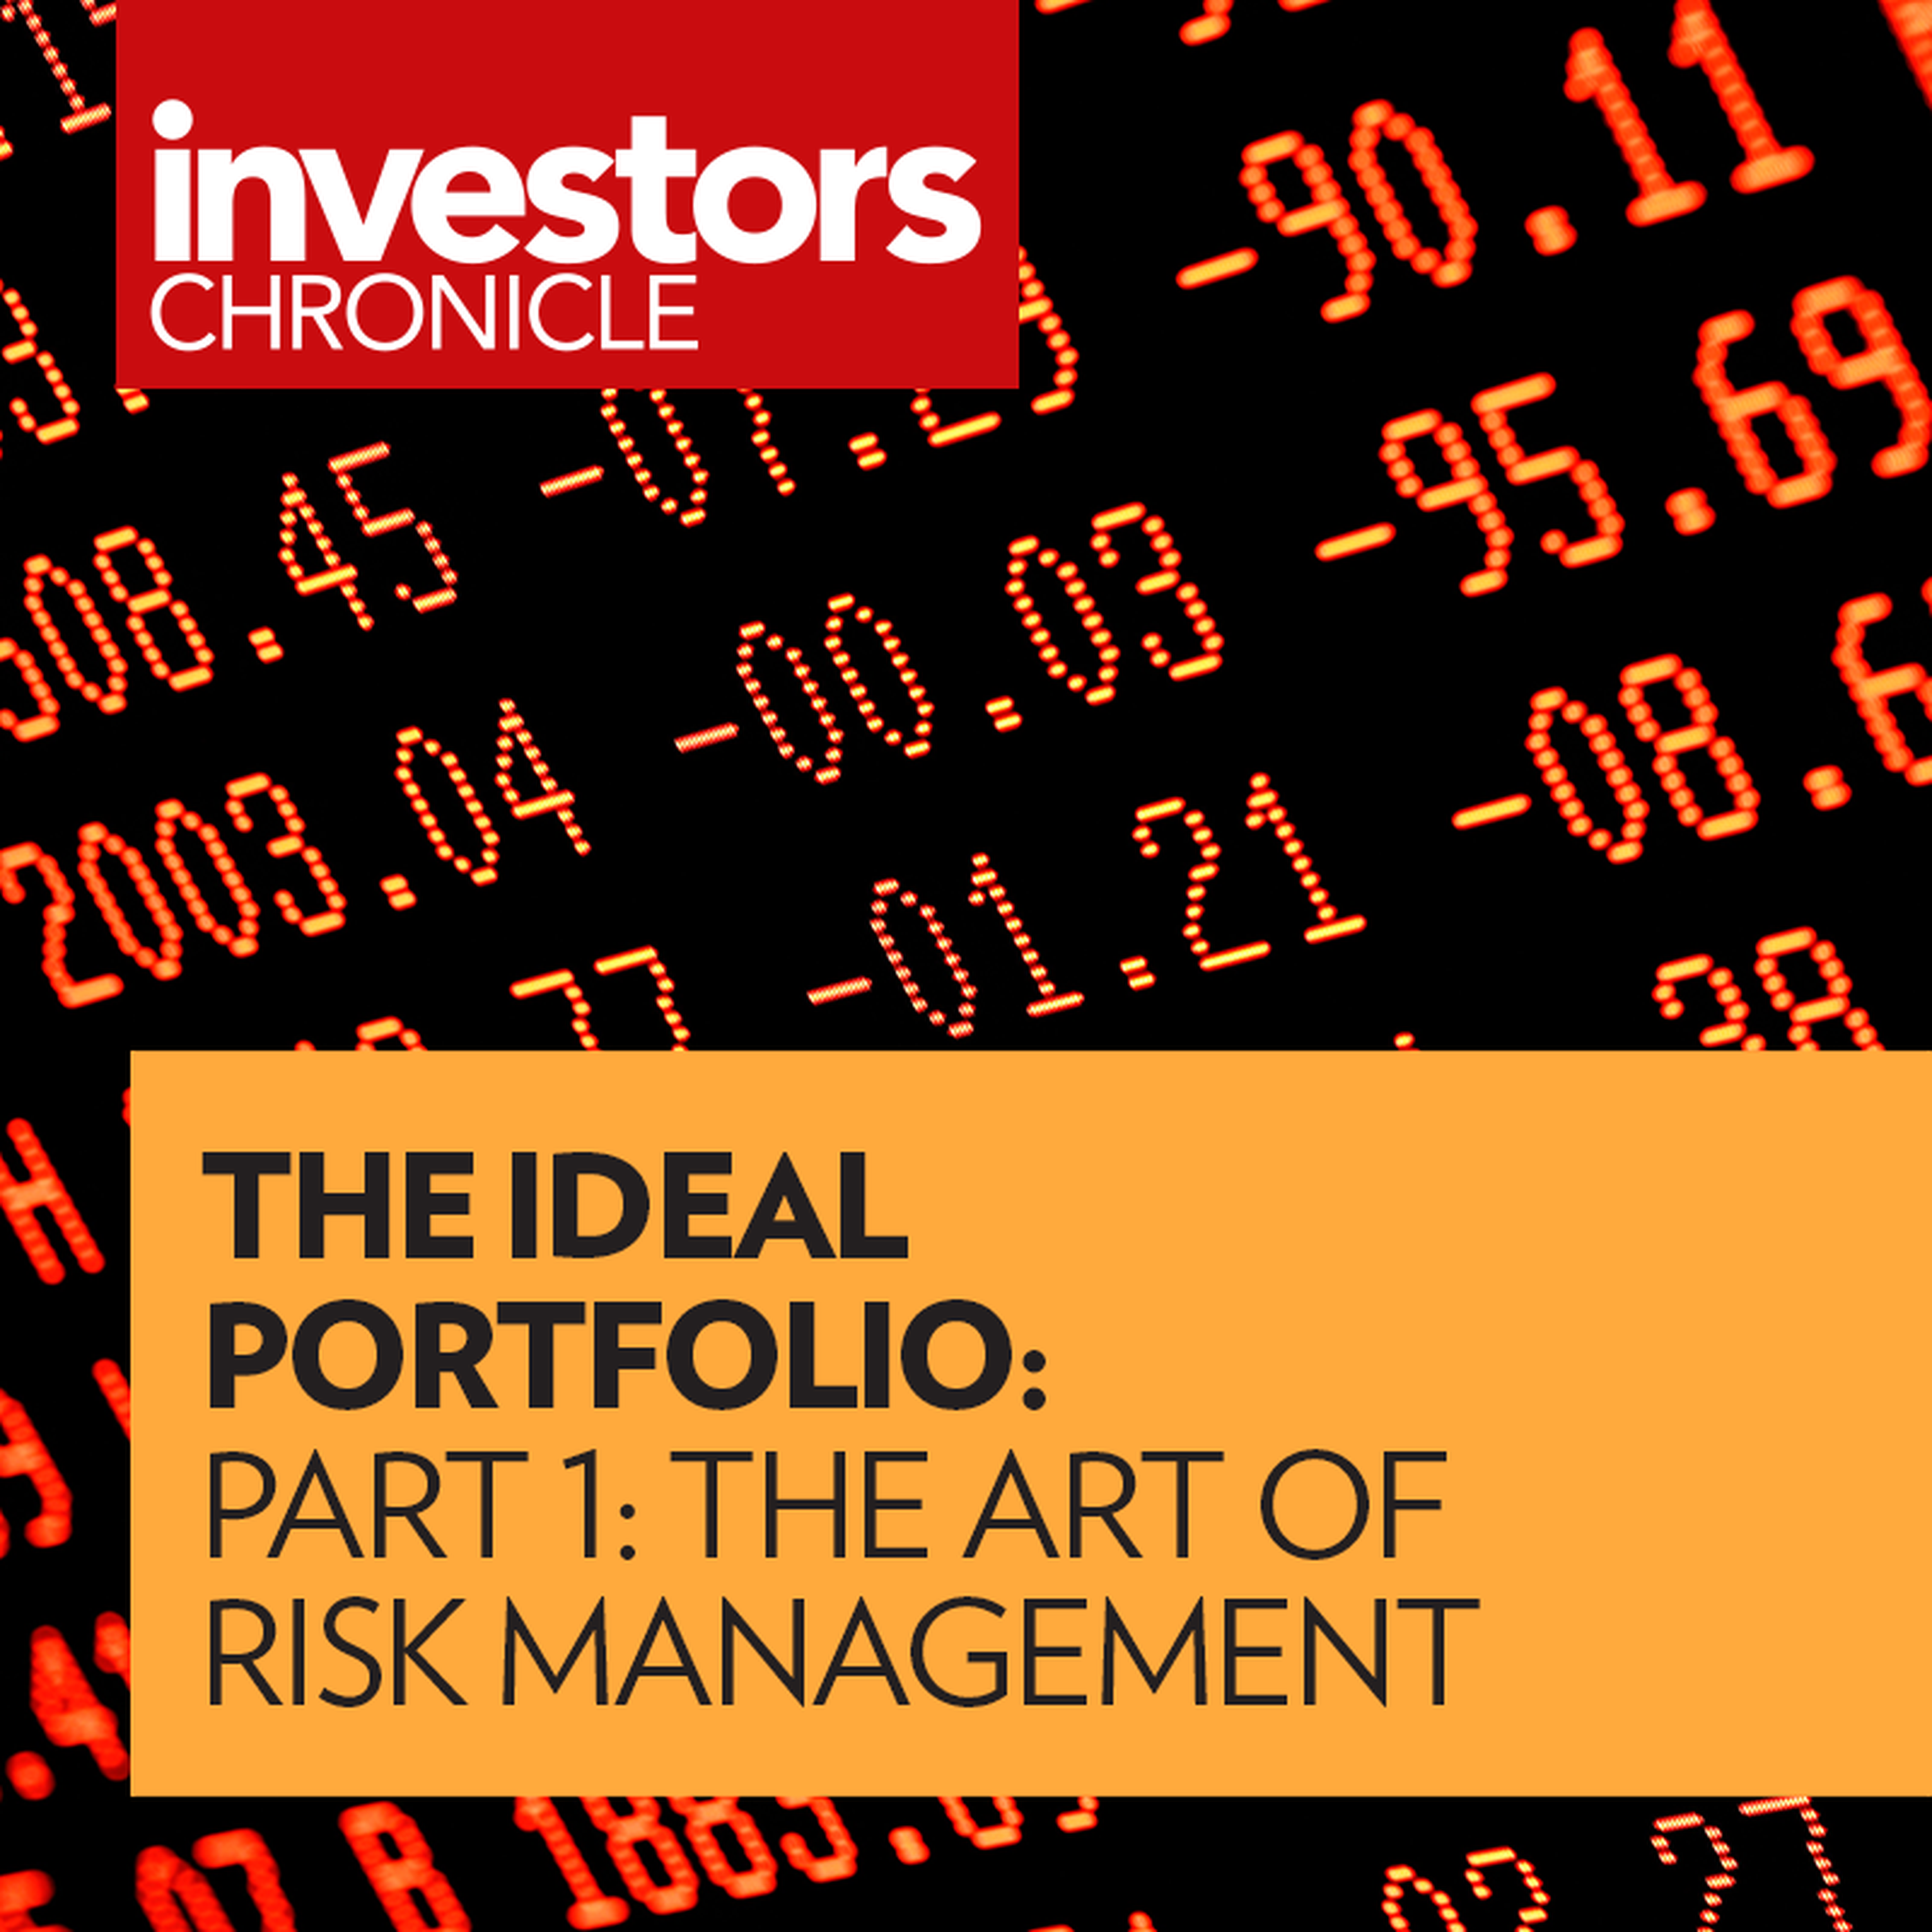 The ideal portfolio: The art of risk management